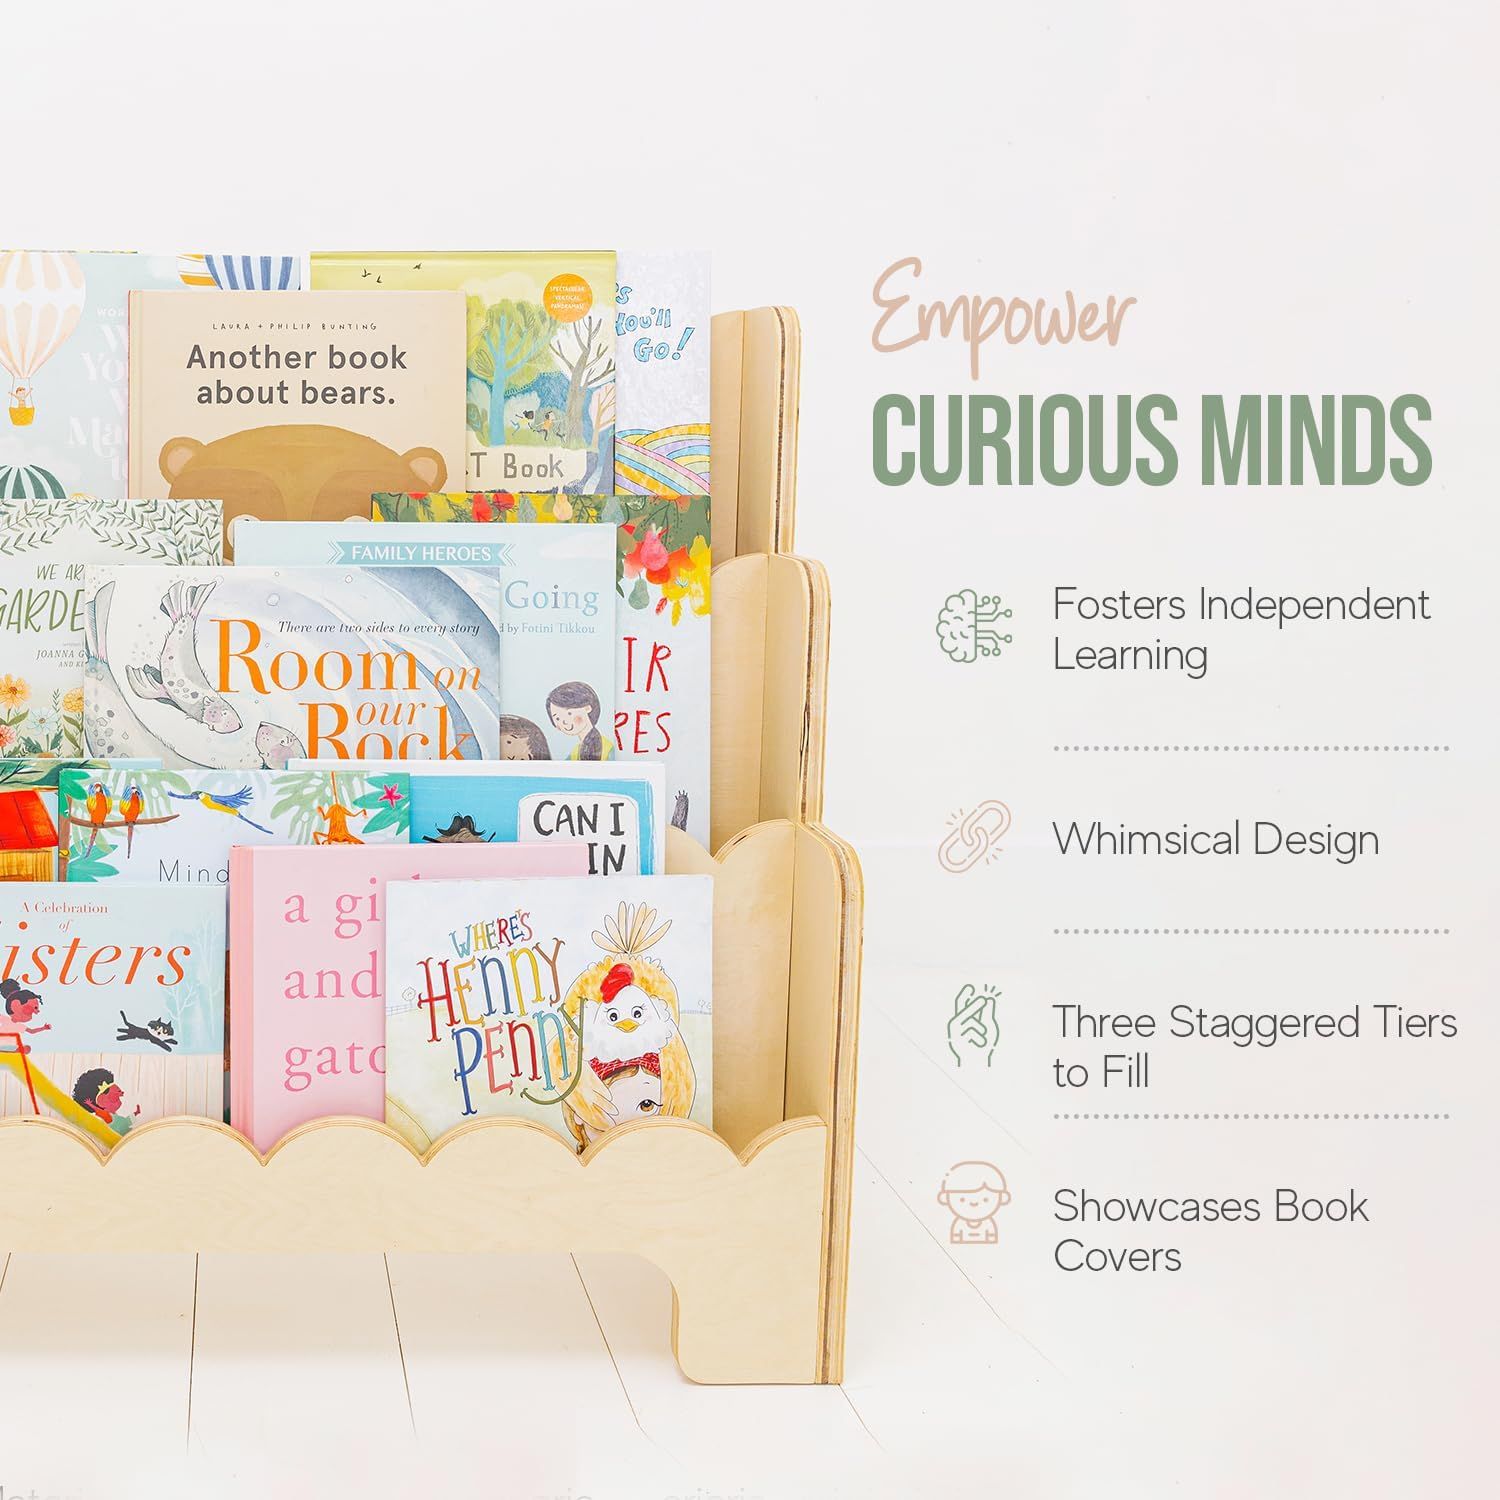 Wooden Kids Bookshelf w/Scalloped Edges - Perfect Height 3-Tier Montessori Bookshelf for Kids - D... | Amazon (US)